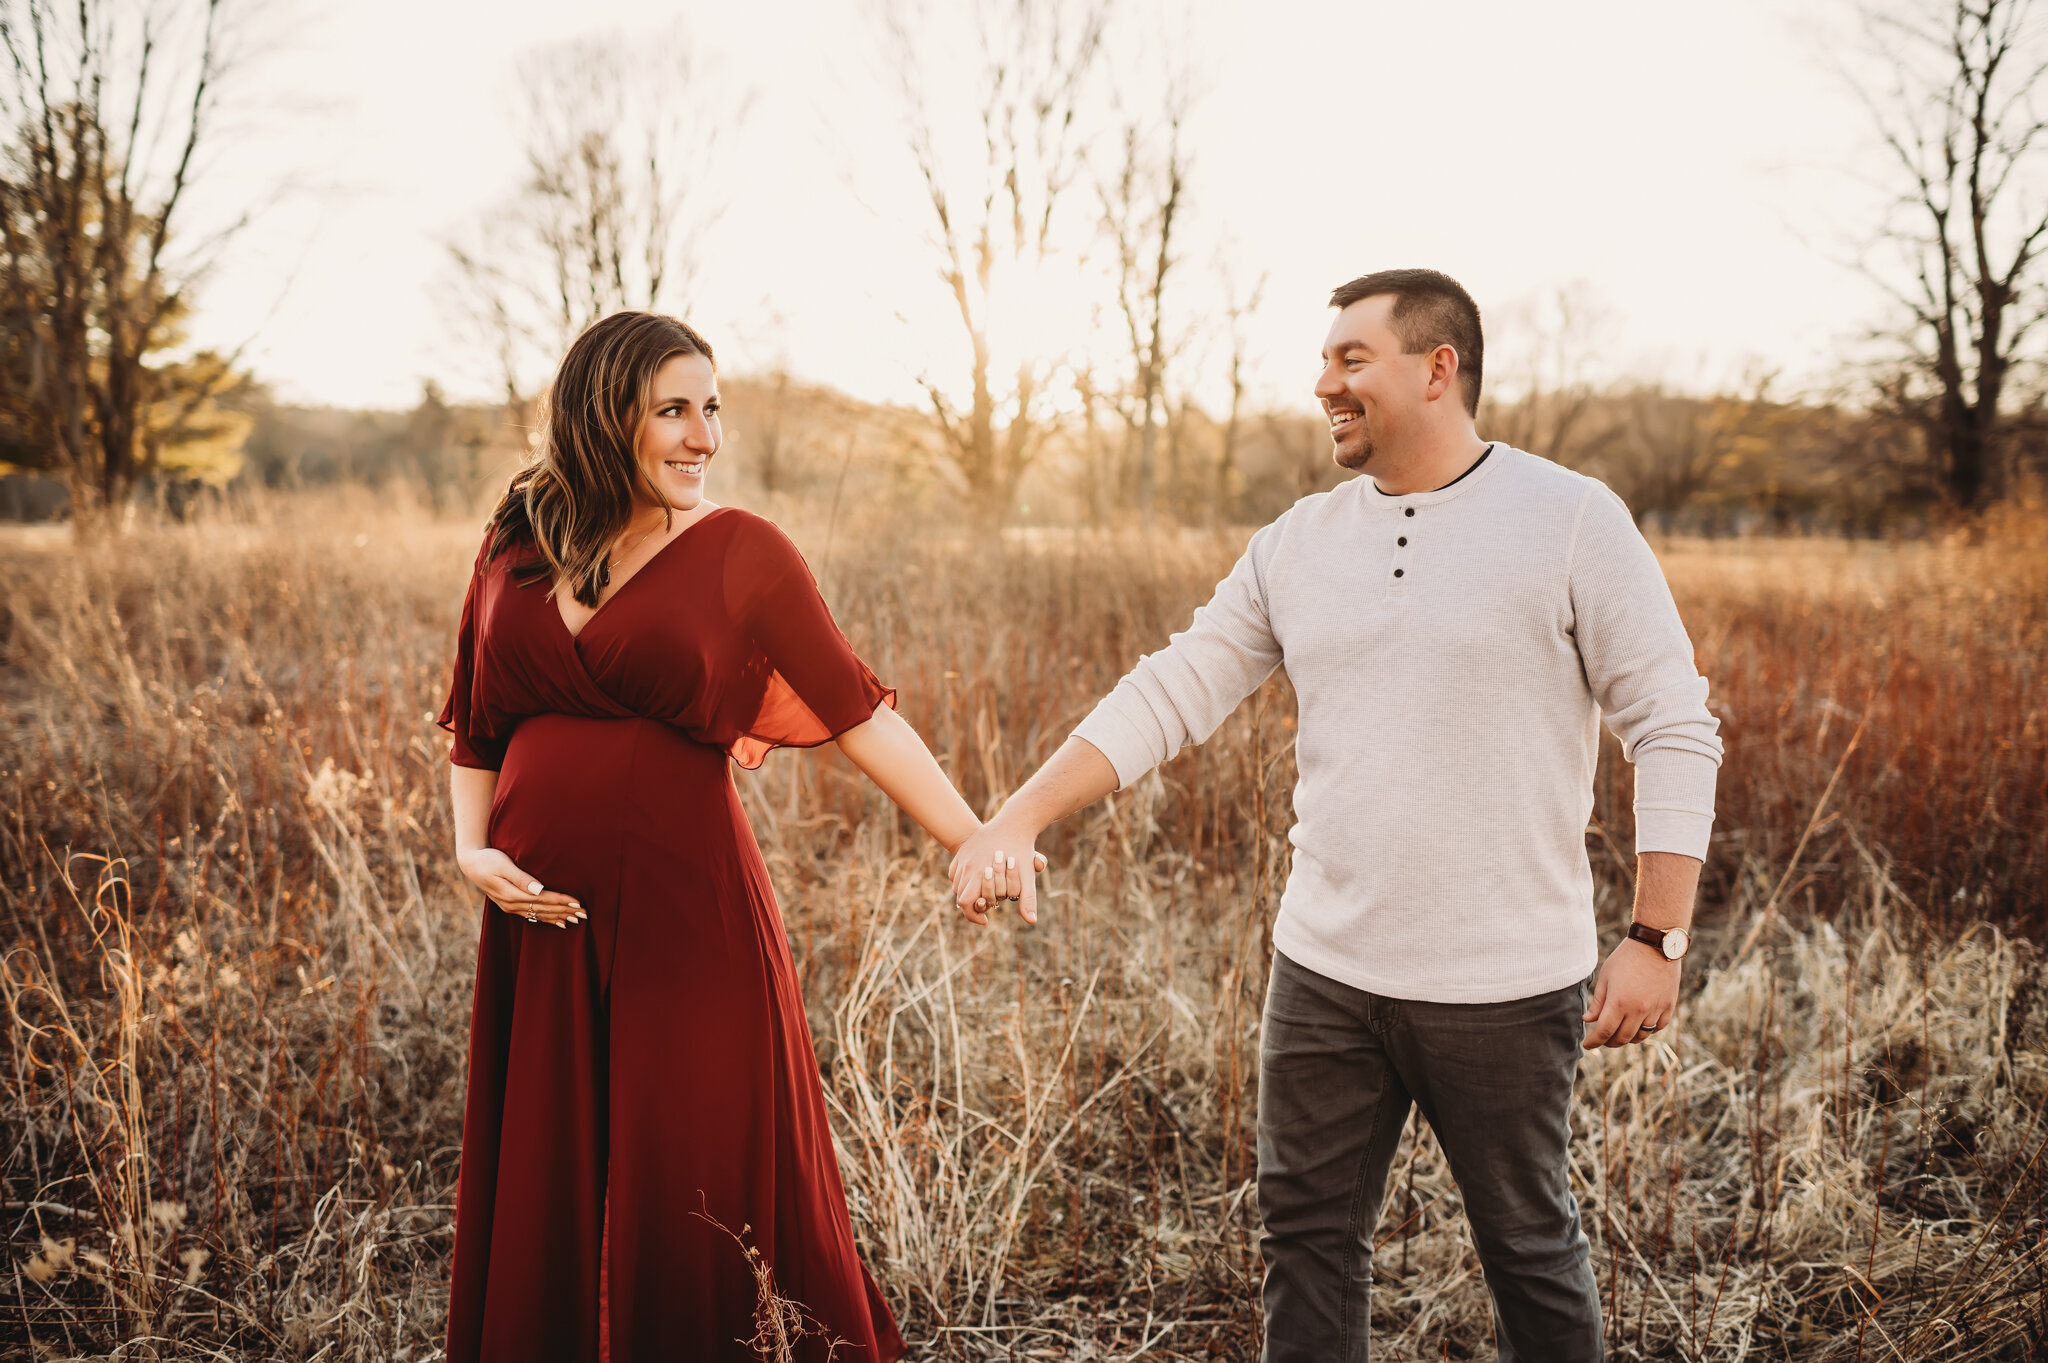 dunlap photographer, maternity photo session, couple walks through tall grasses